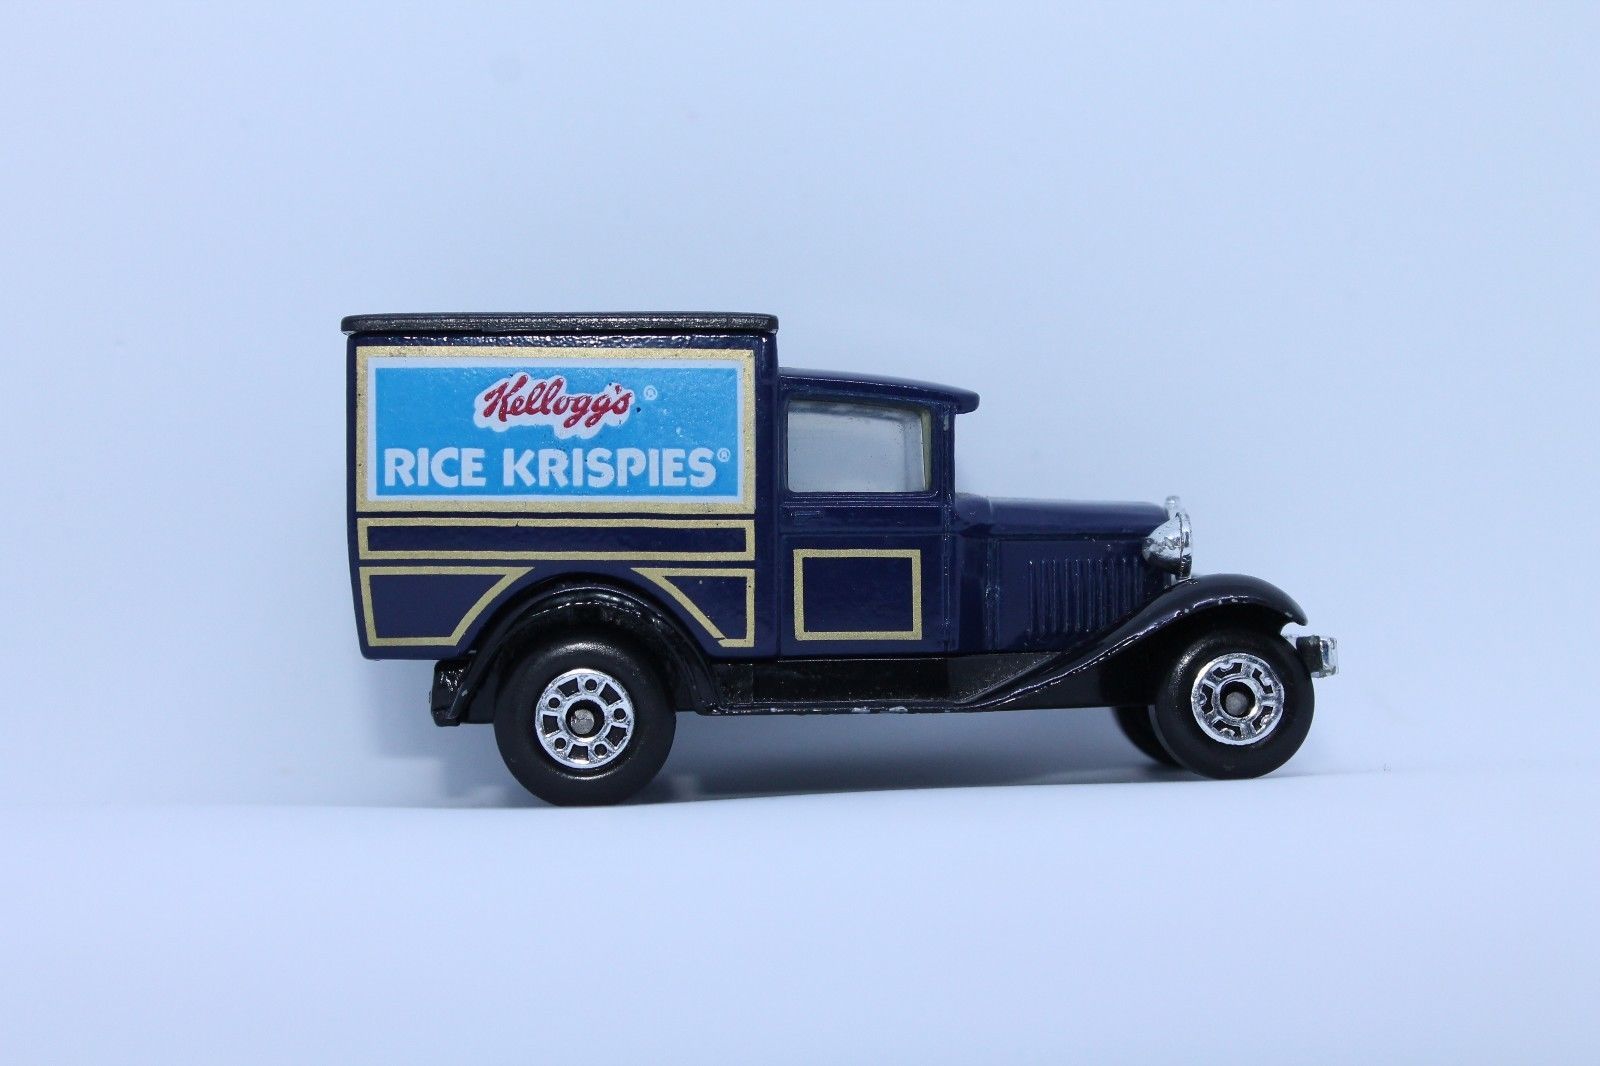 rice krispies matchbox car